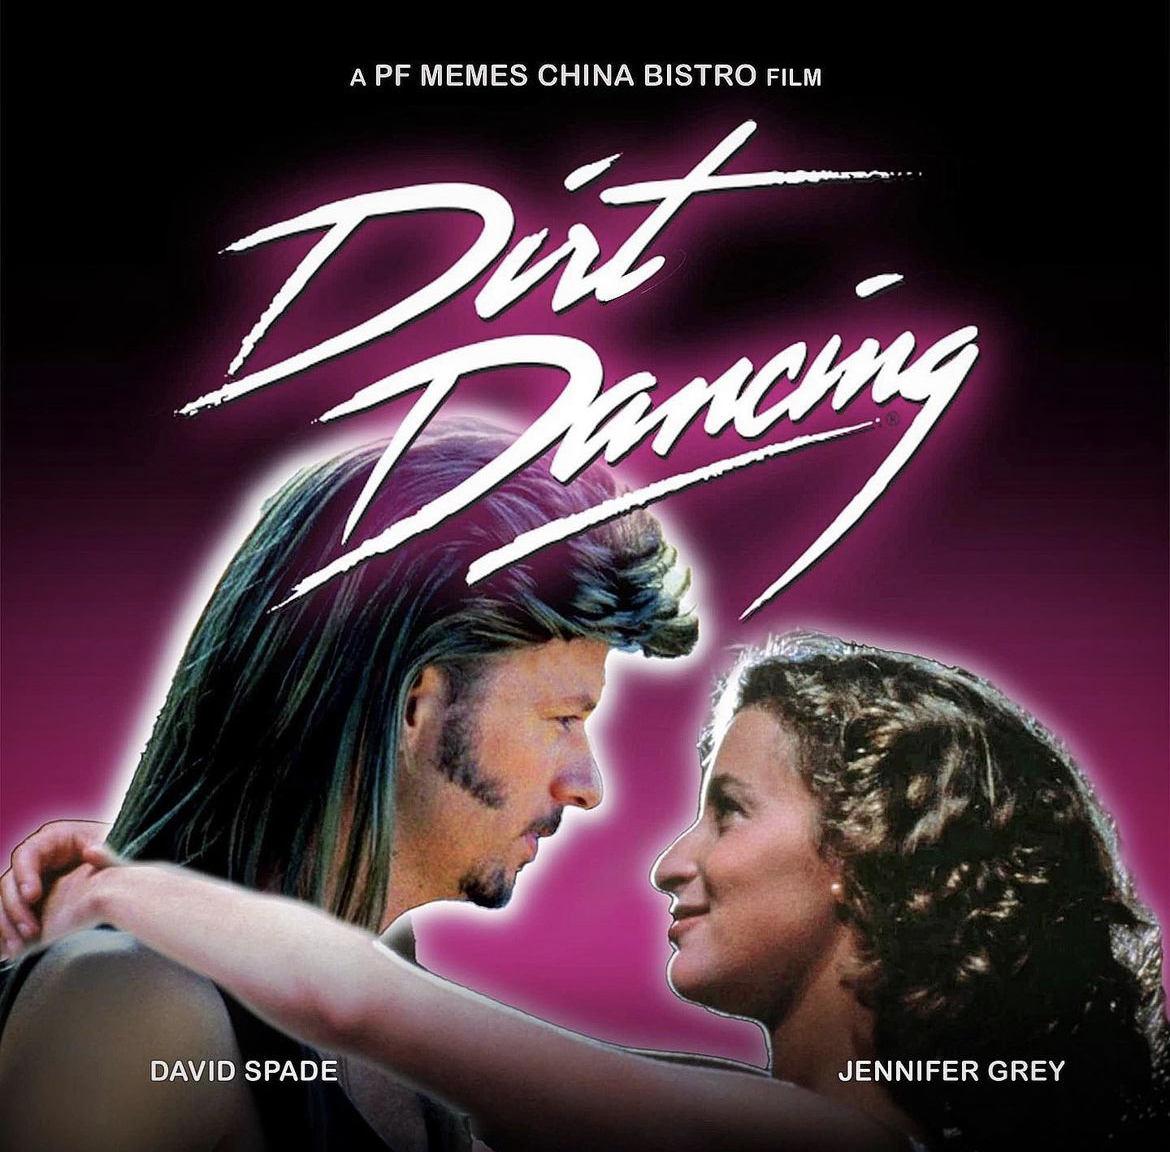 PFMemesChinaBistro Memes - poster - David Spade A Pf Memes China Bistro Film wit Dancing Jennifer Grey